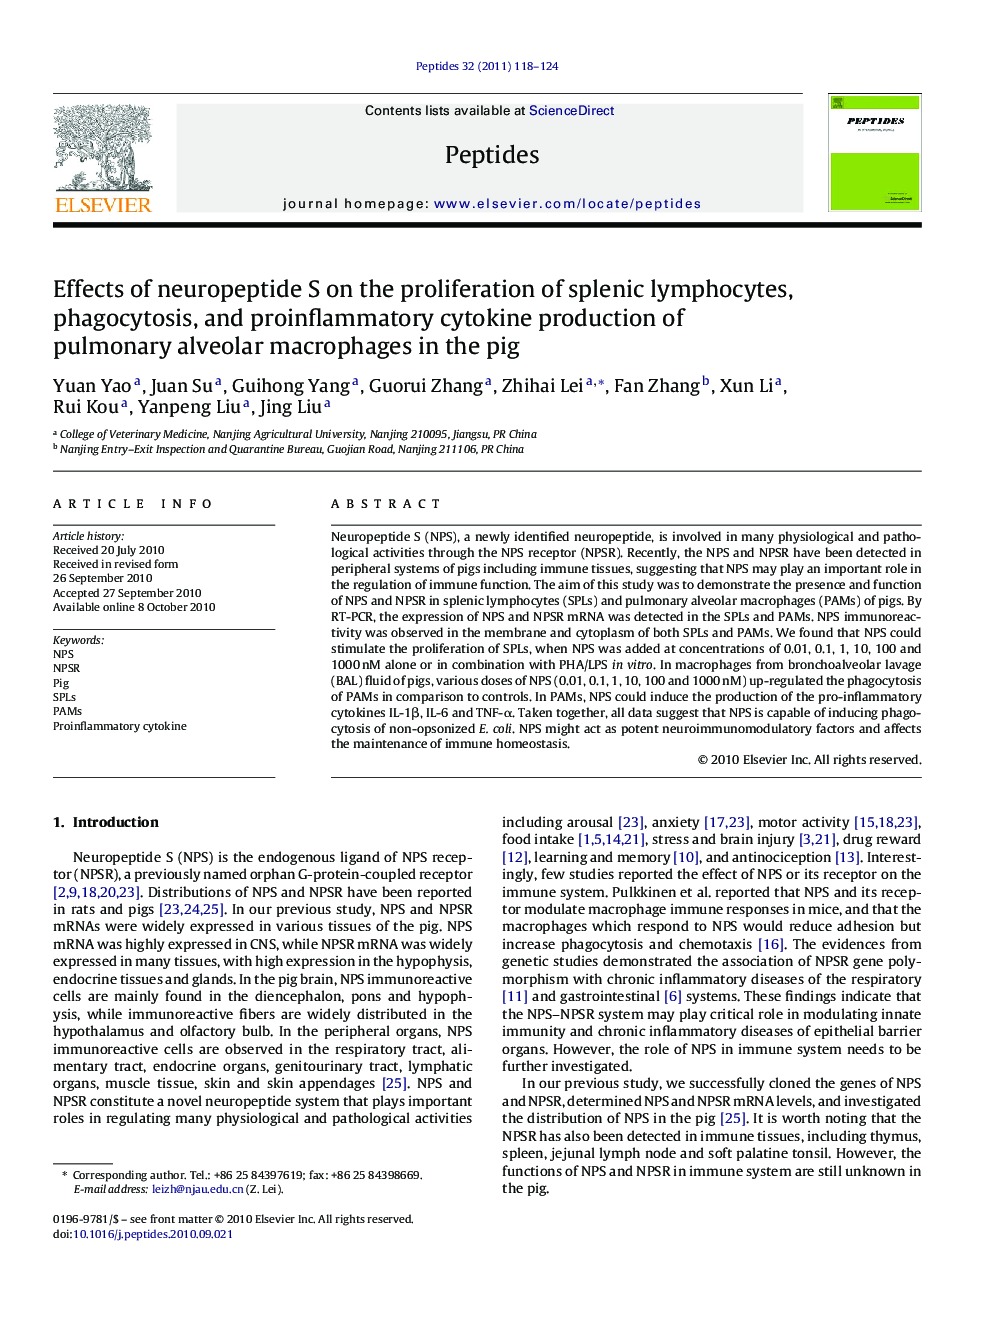 Effects of neuropeptide S on the proliferation of splenic lymphocytes, phagocytosis, and proinflammatory cytokine production of pulmonary alveolar macrophages in the pig